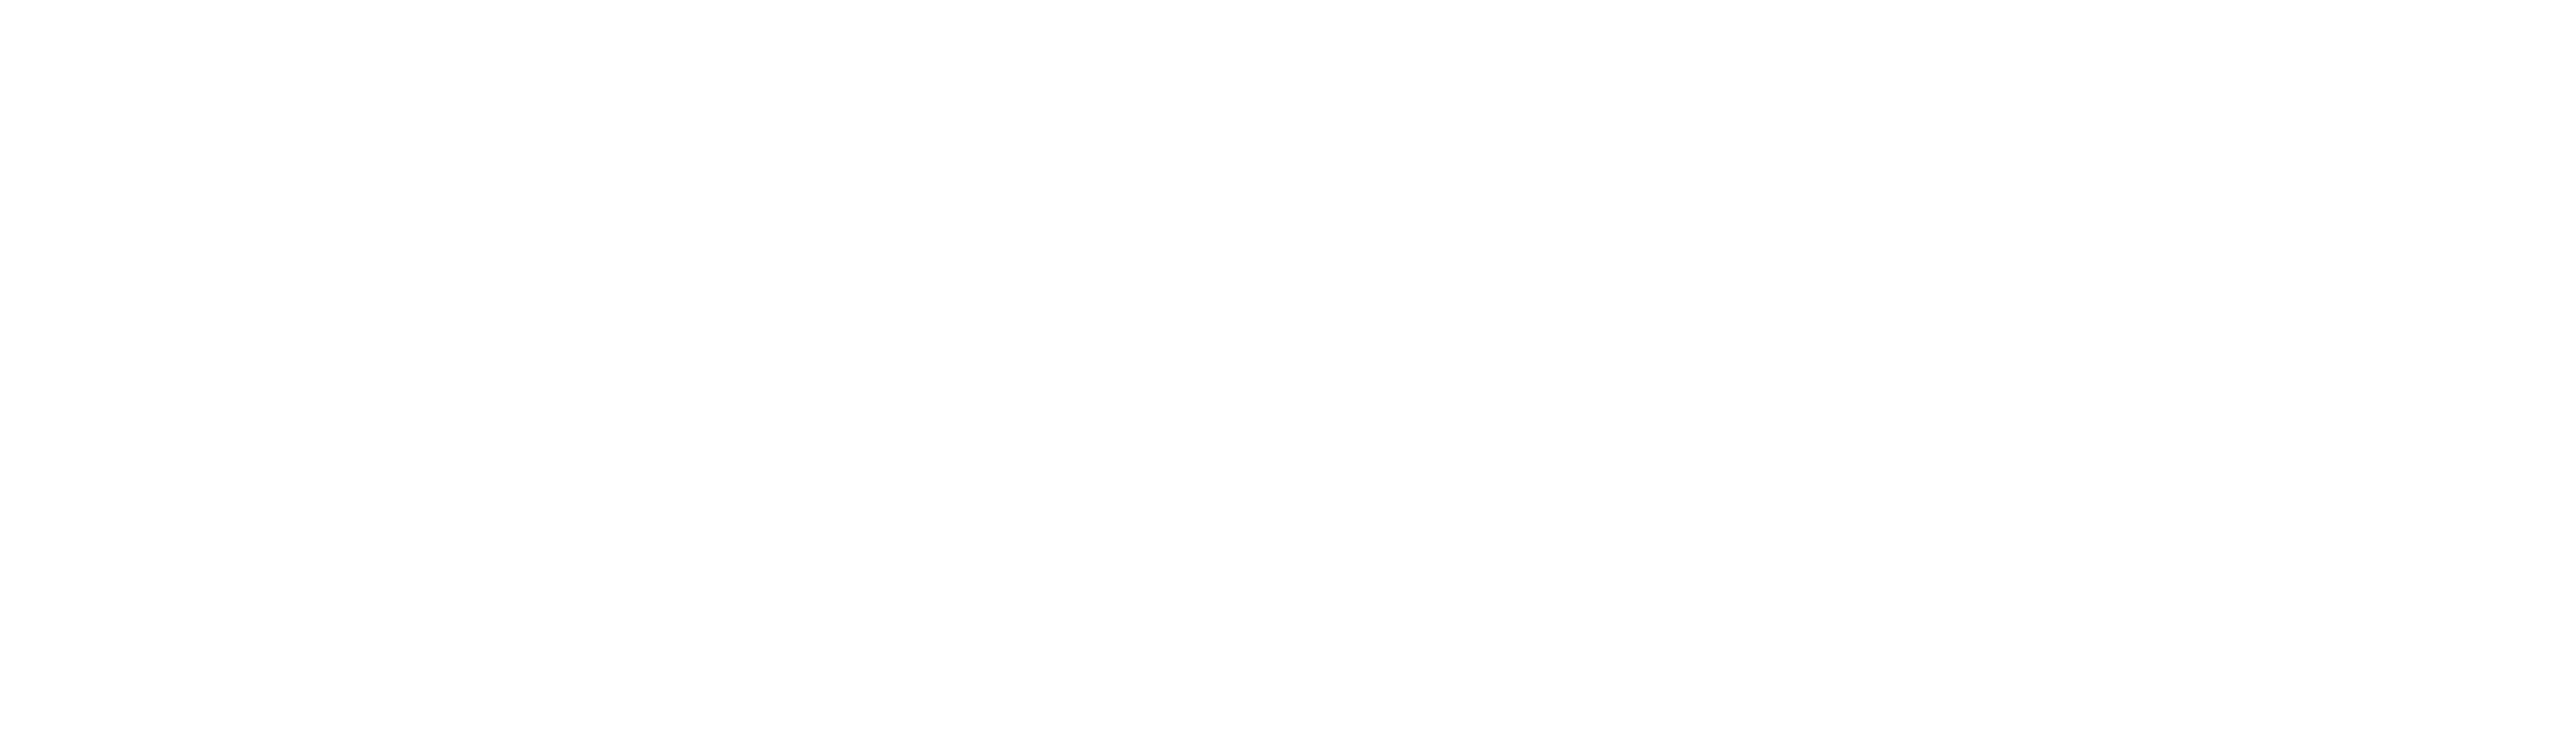 mtn falls logo